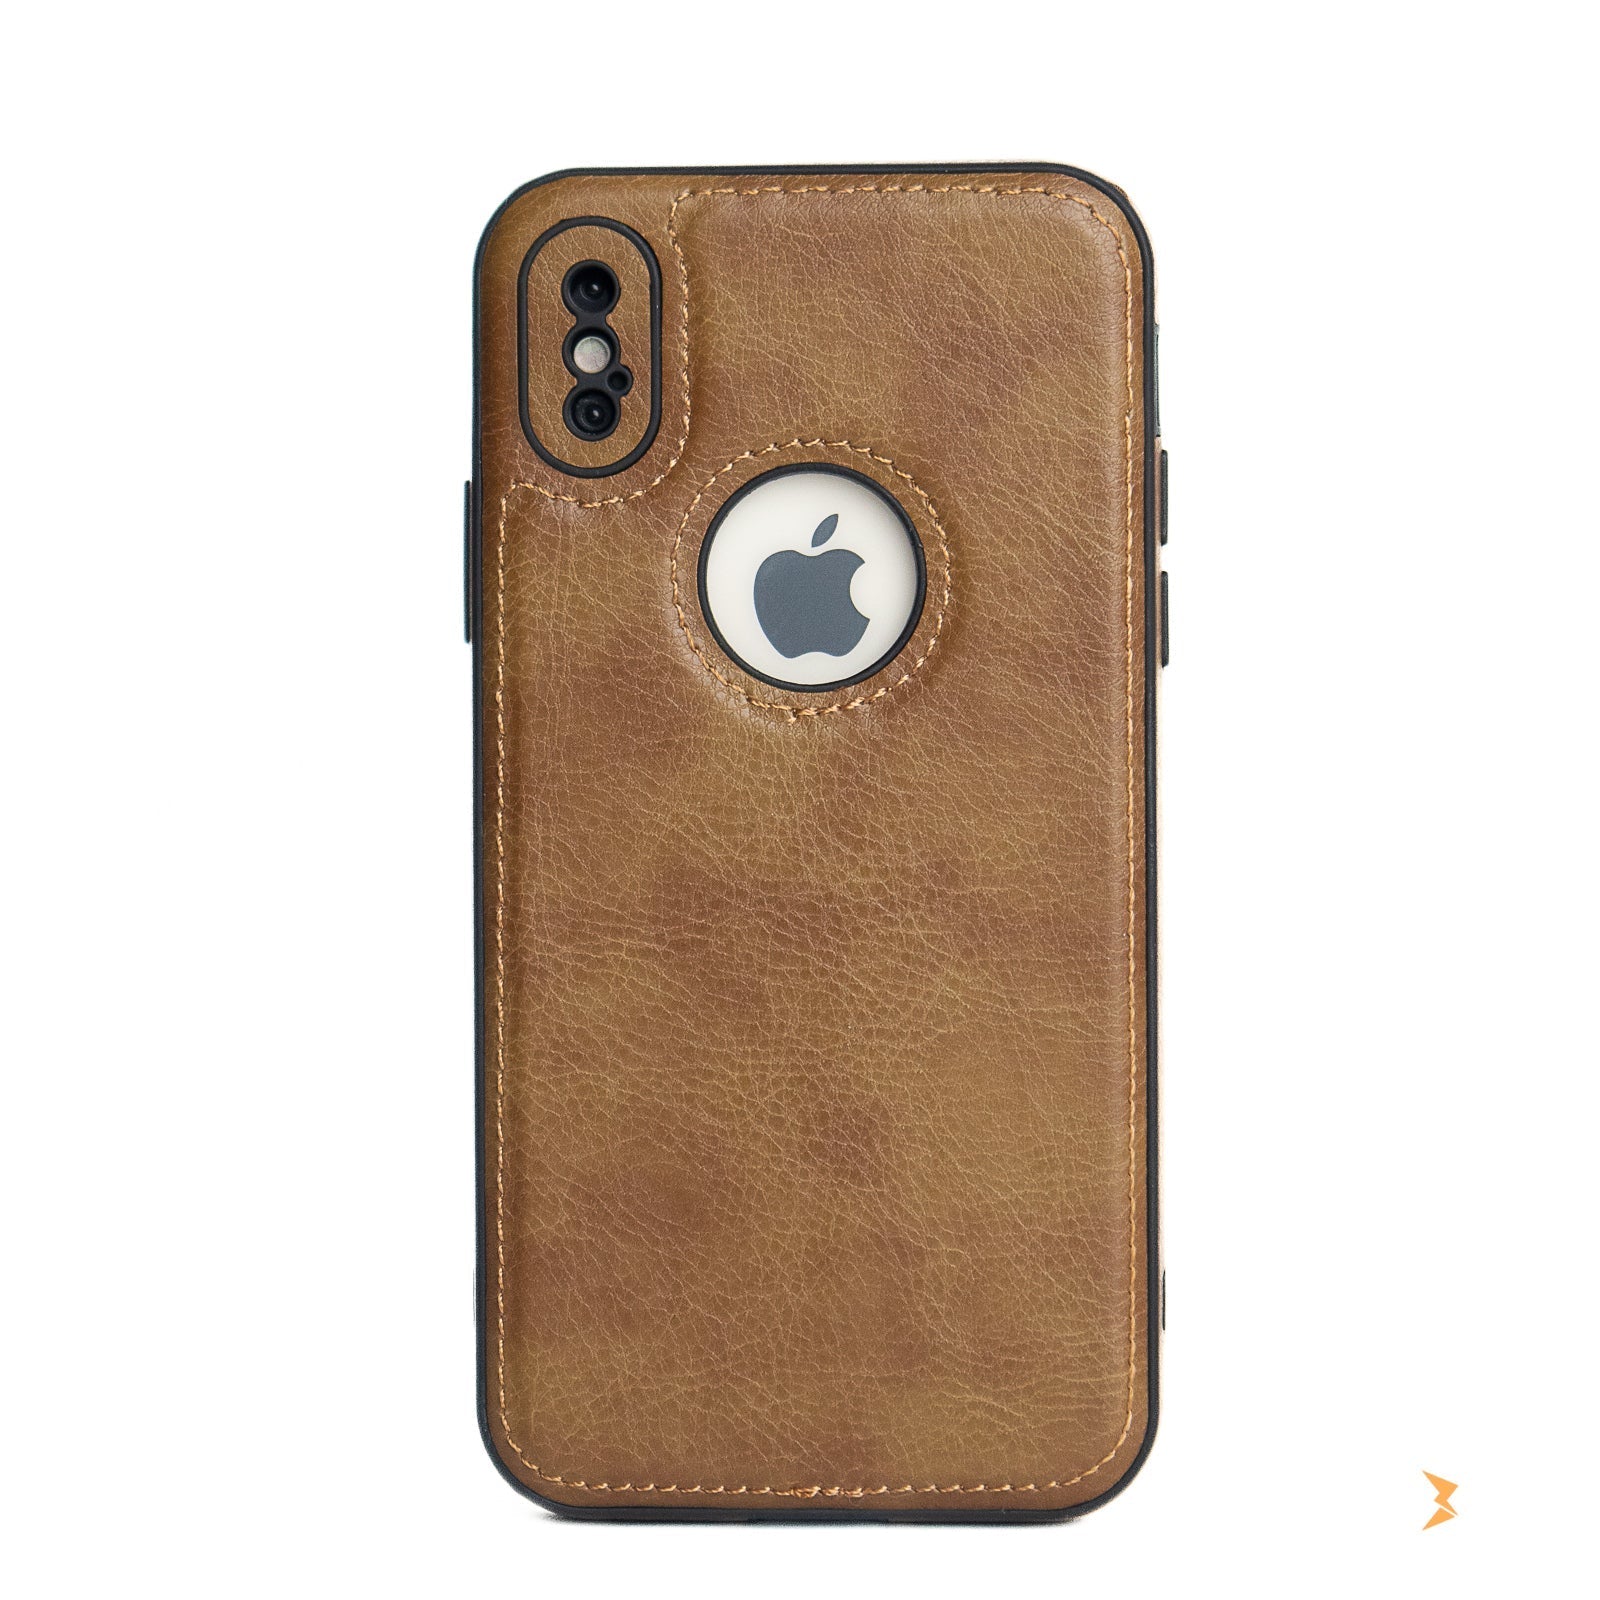 Prato Leather Case iPhone Xs Max Three store